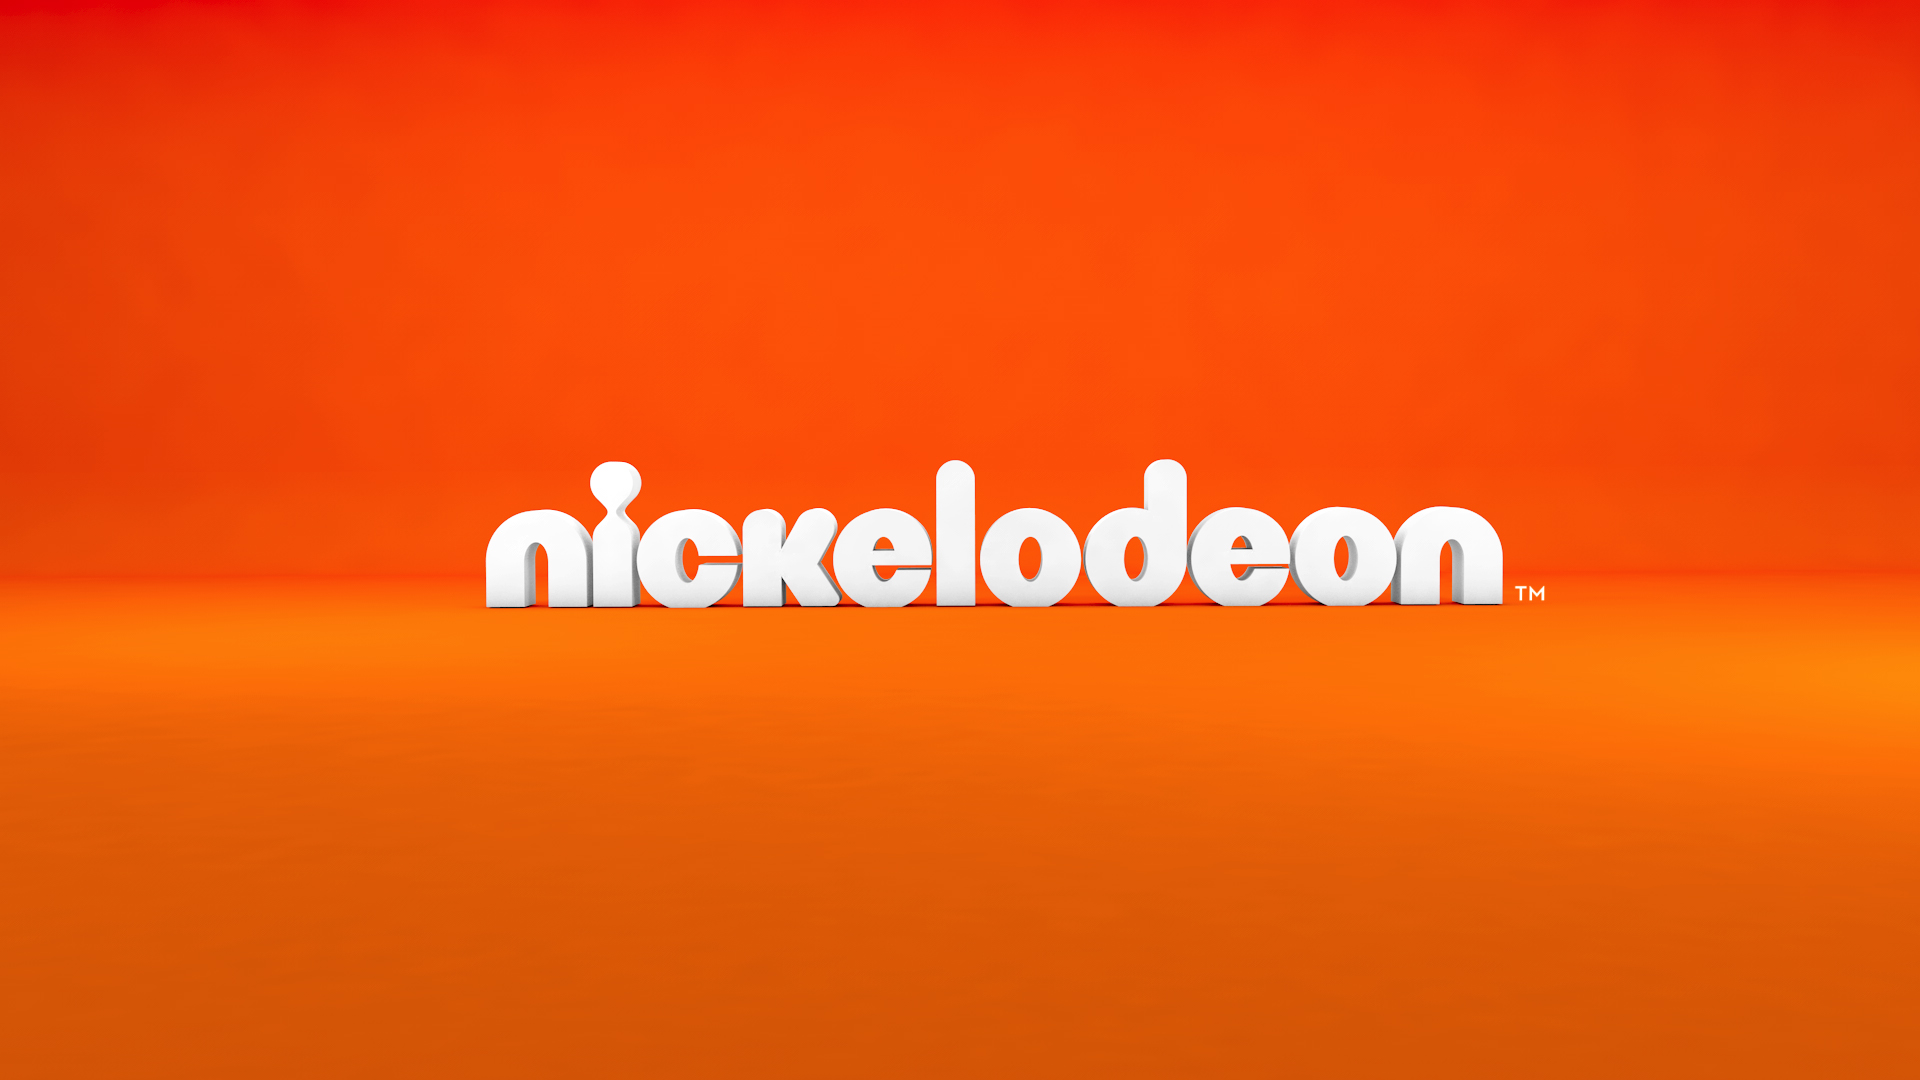 Nickelodeon In 2015